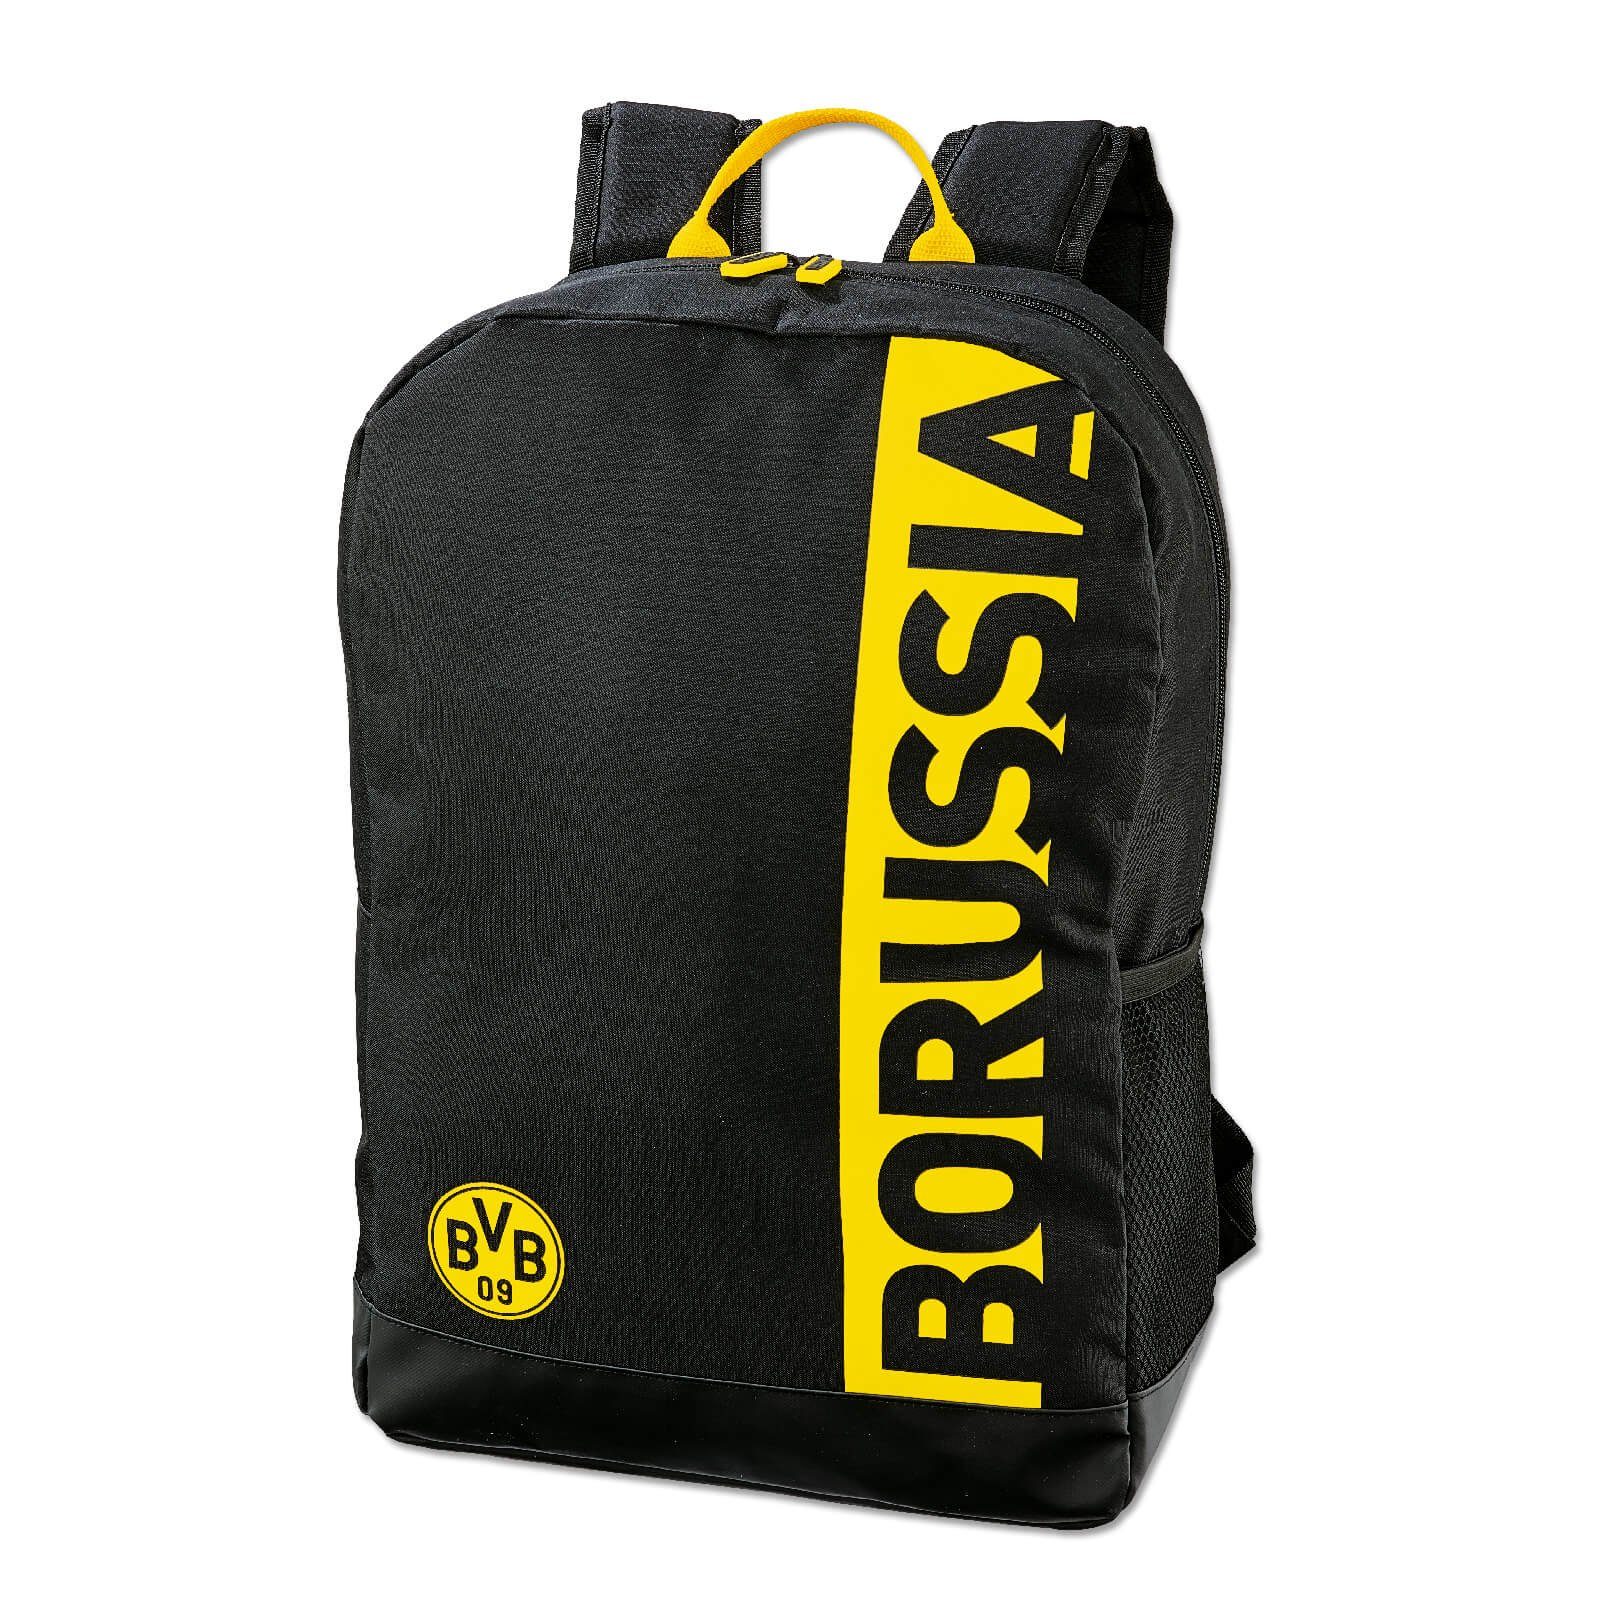 Freizeitrucksack (Packung) BVB BORUSSIA-Rucksack